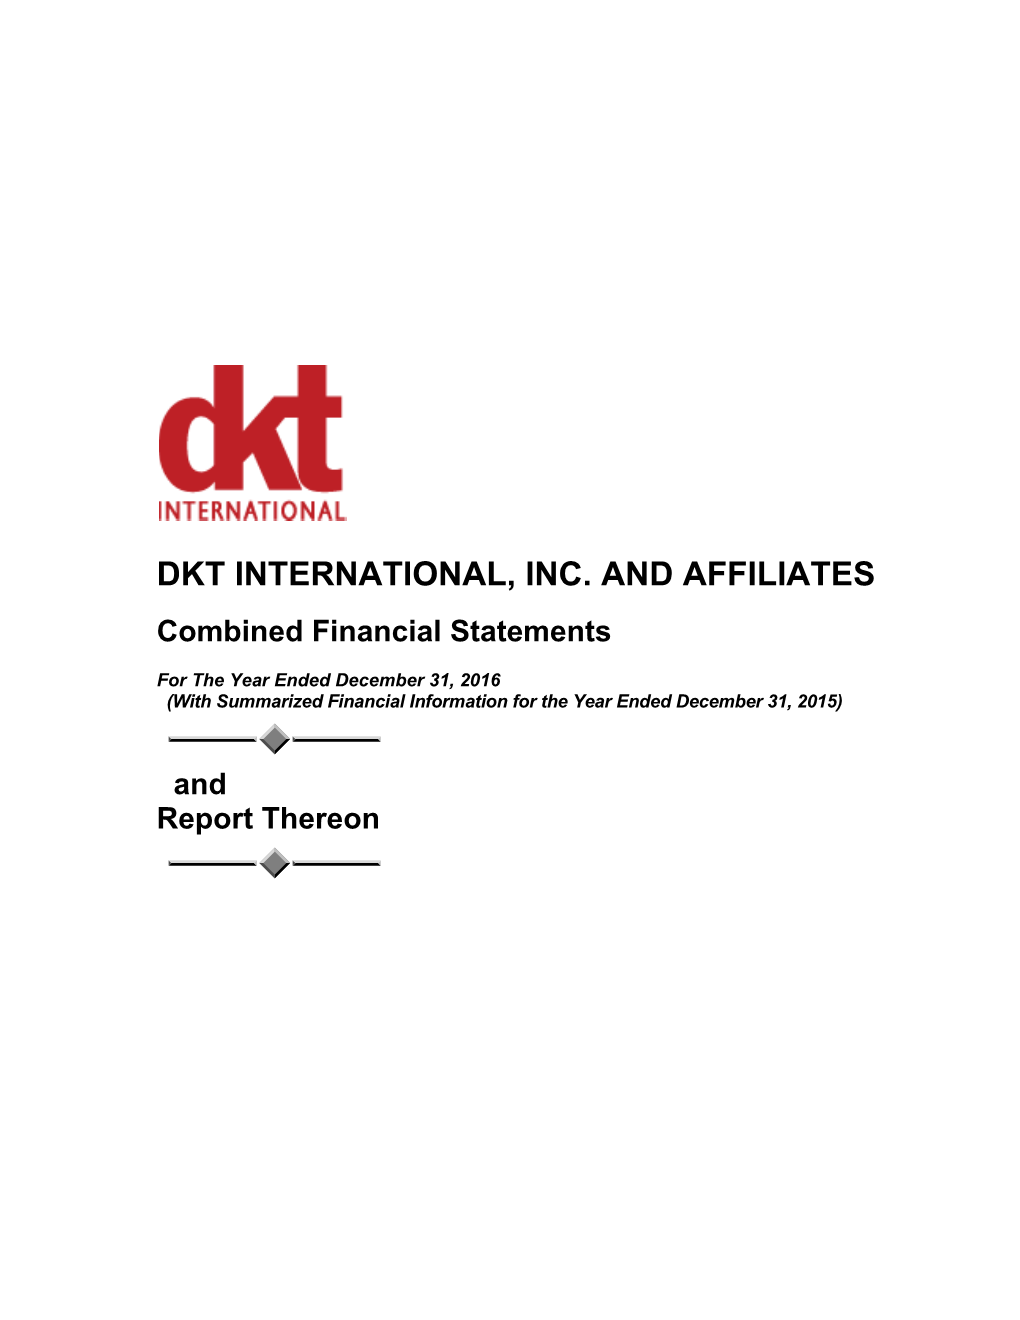 Dkt International, Inc. and Affiliates